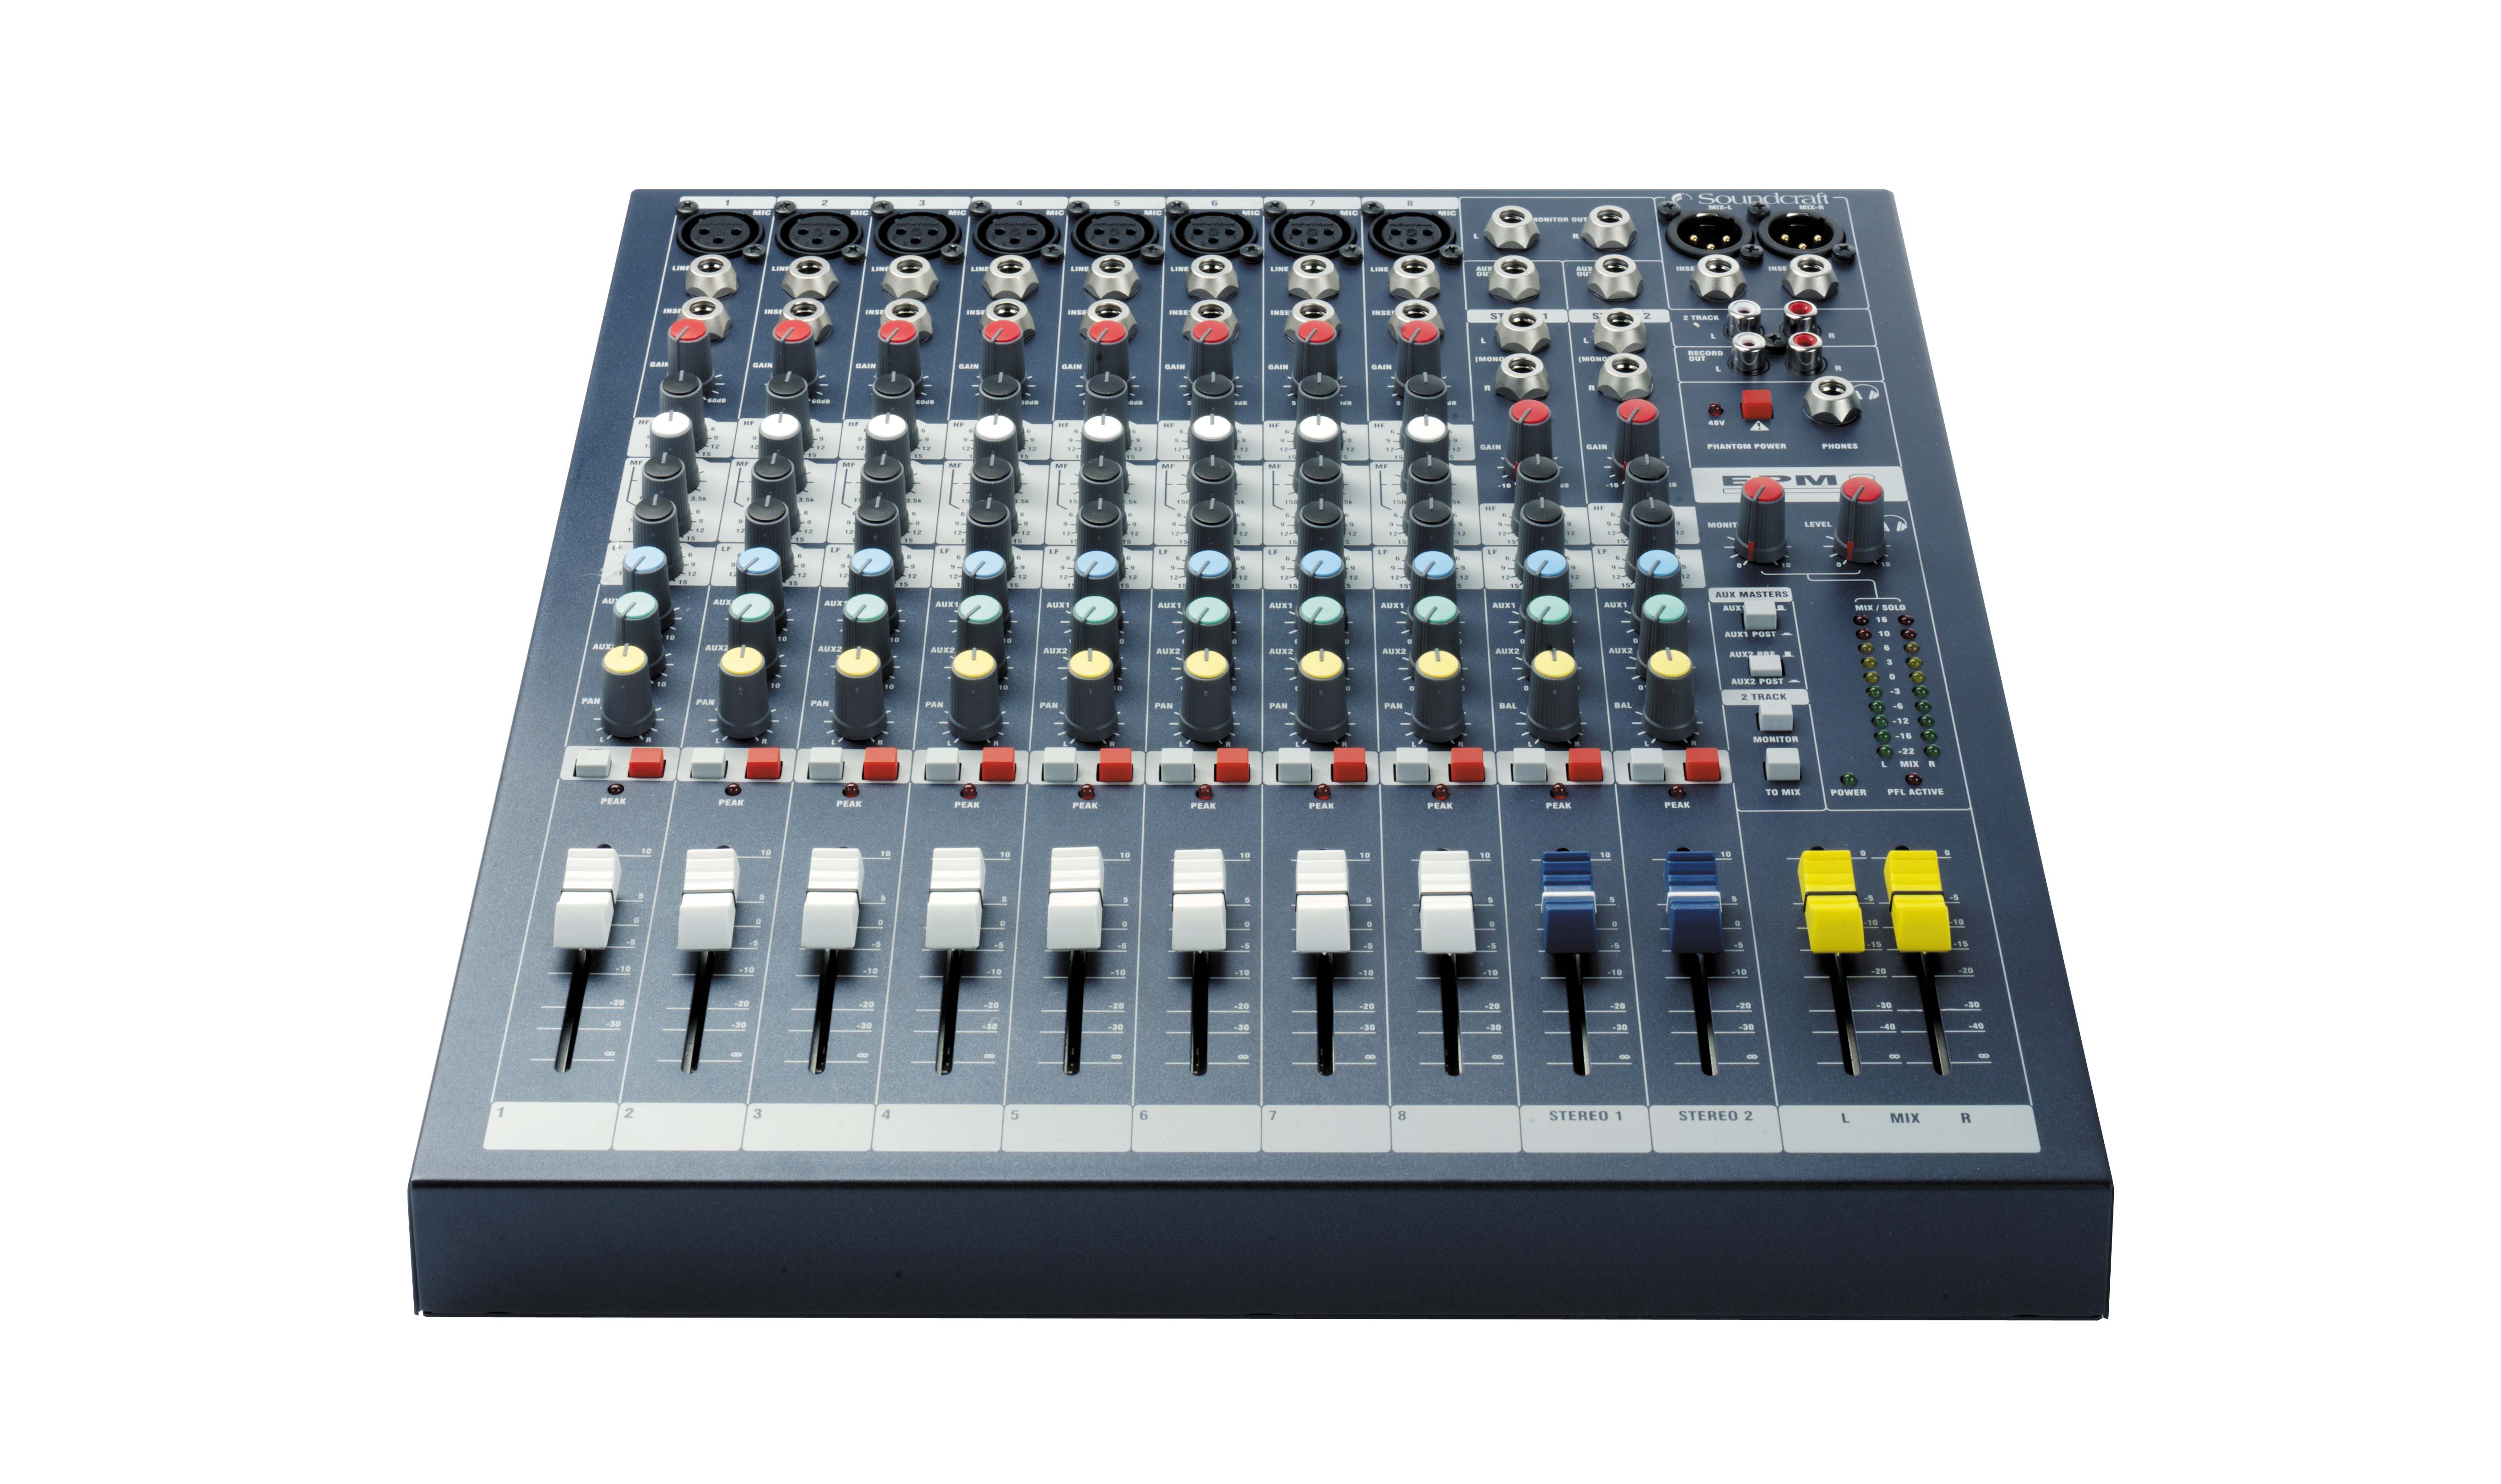 Soundcraft Epm8 - Analog mixing desk - Variation 3